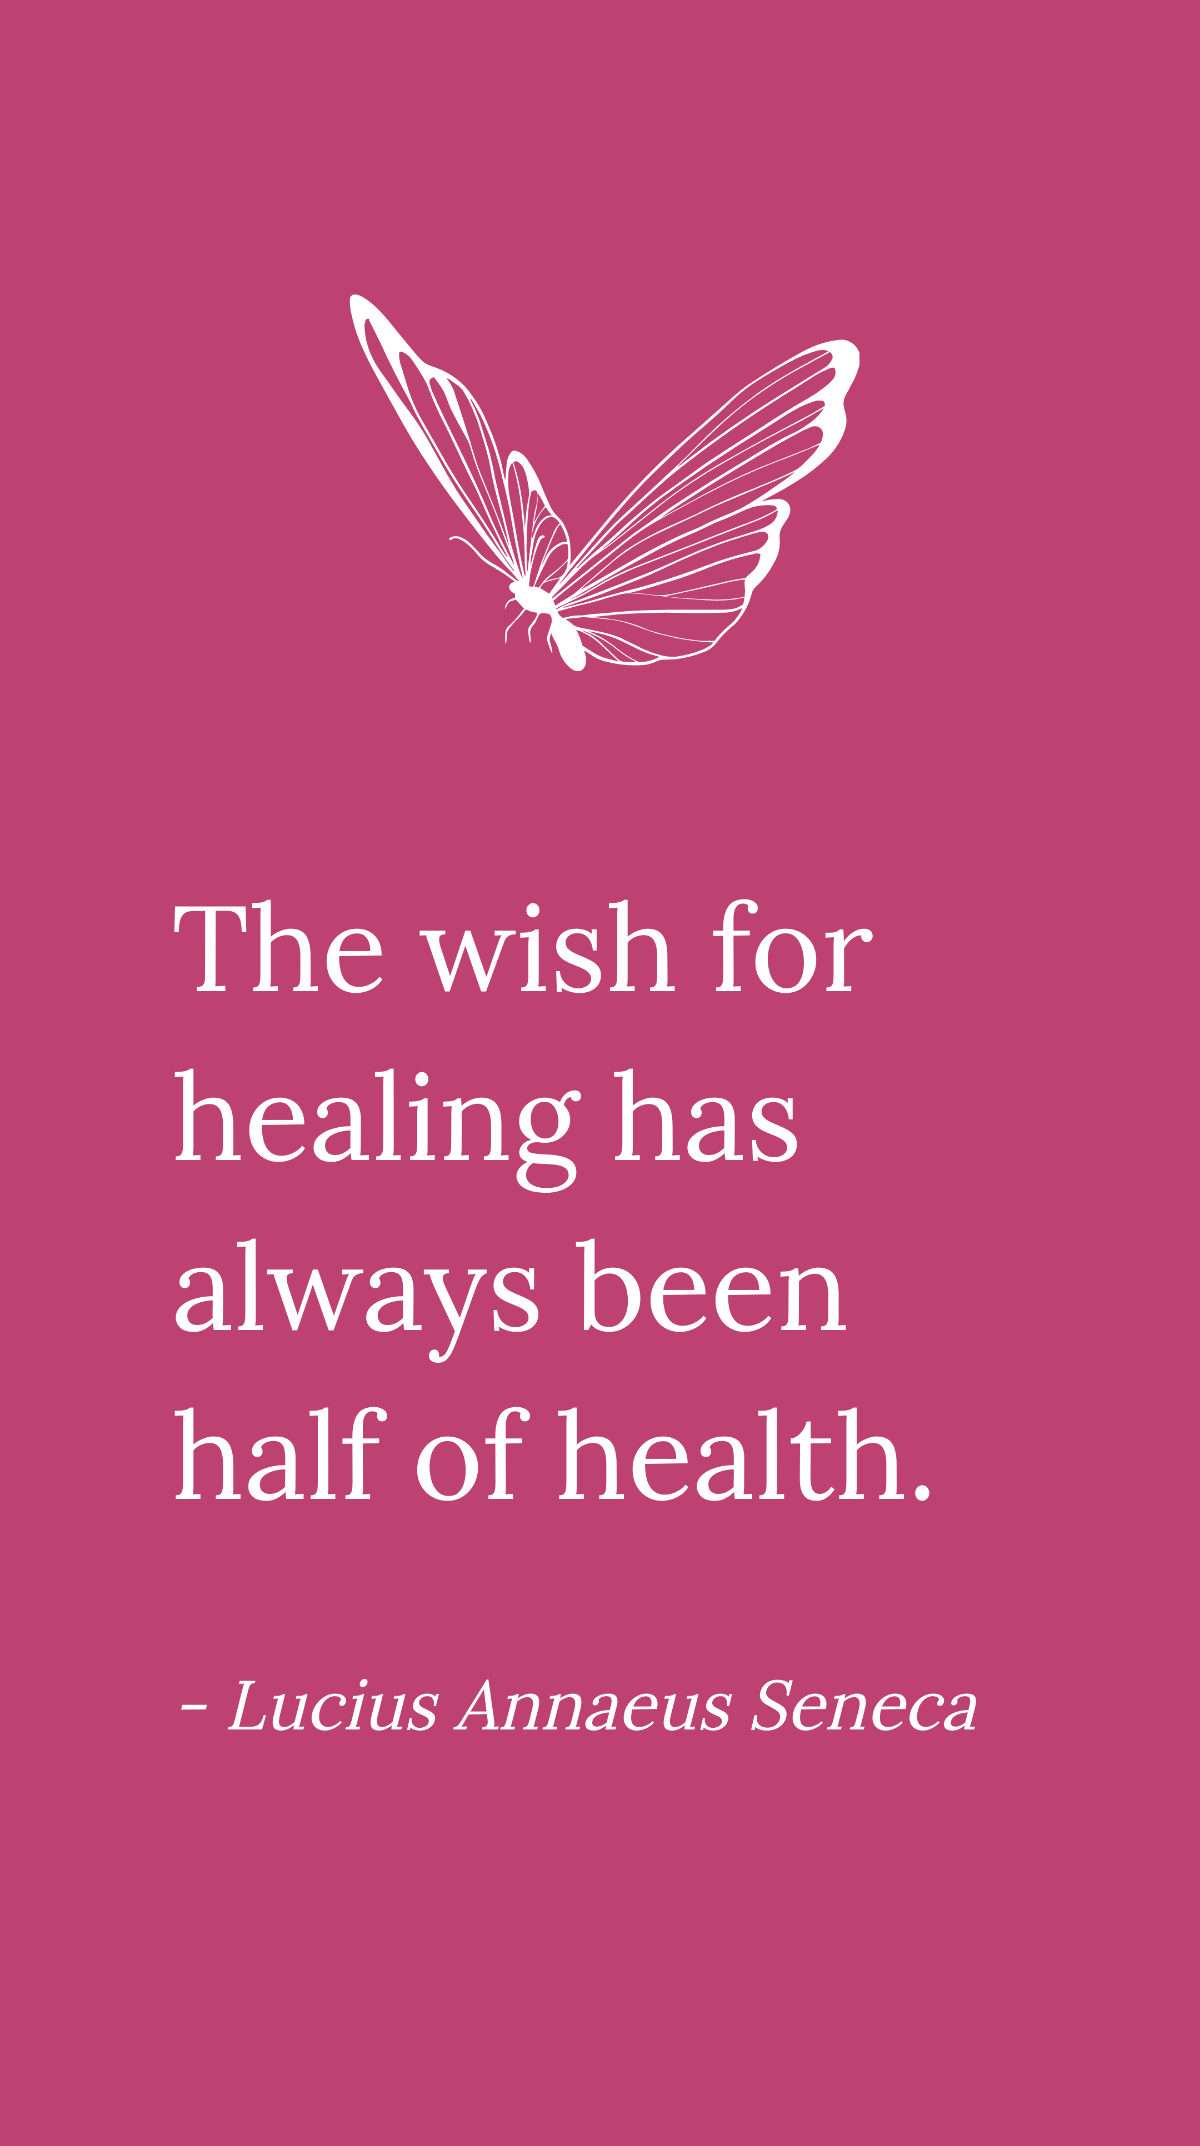 Lucius Annaeus Seneca - The wish for healing has always been half of health.